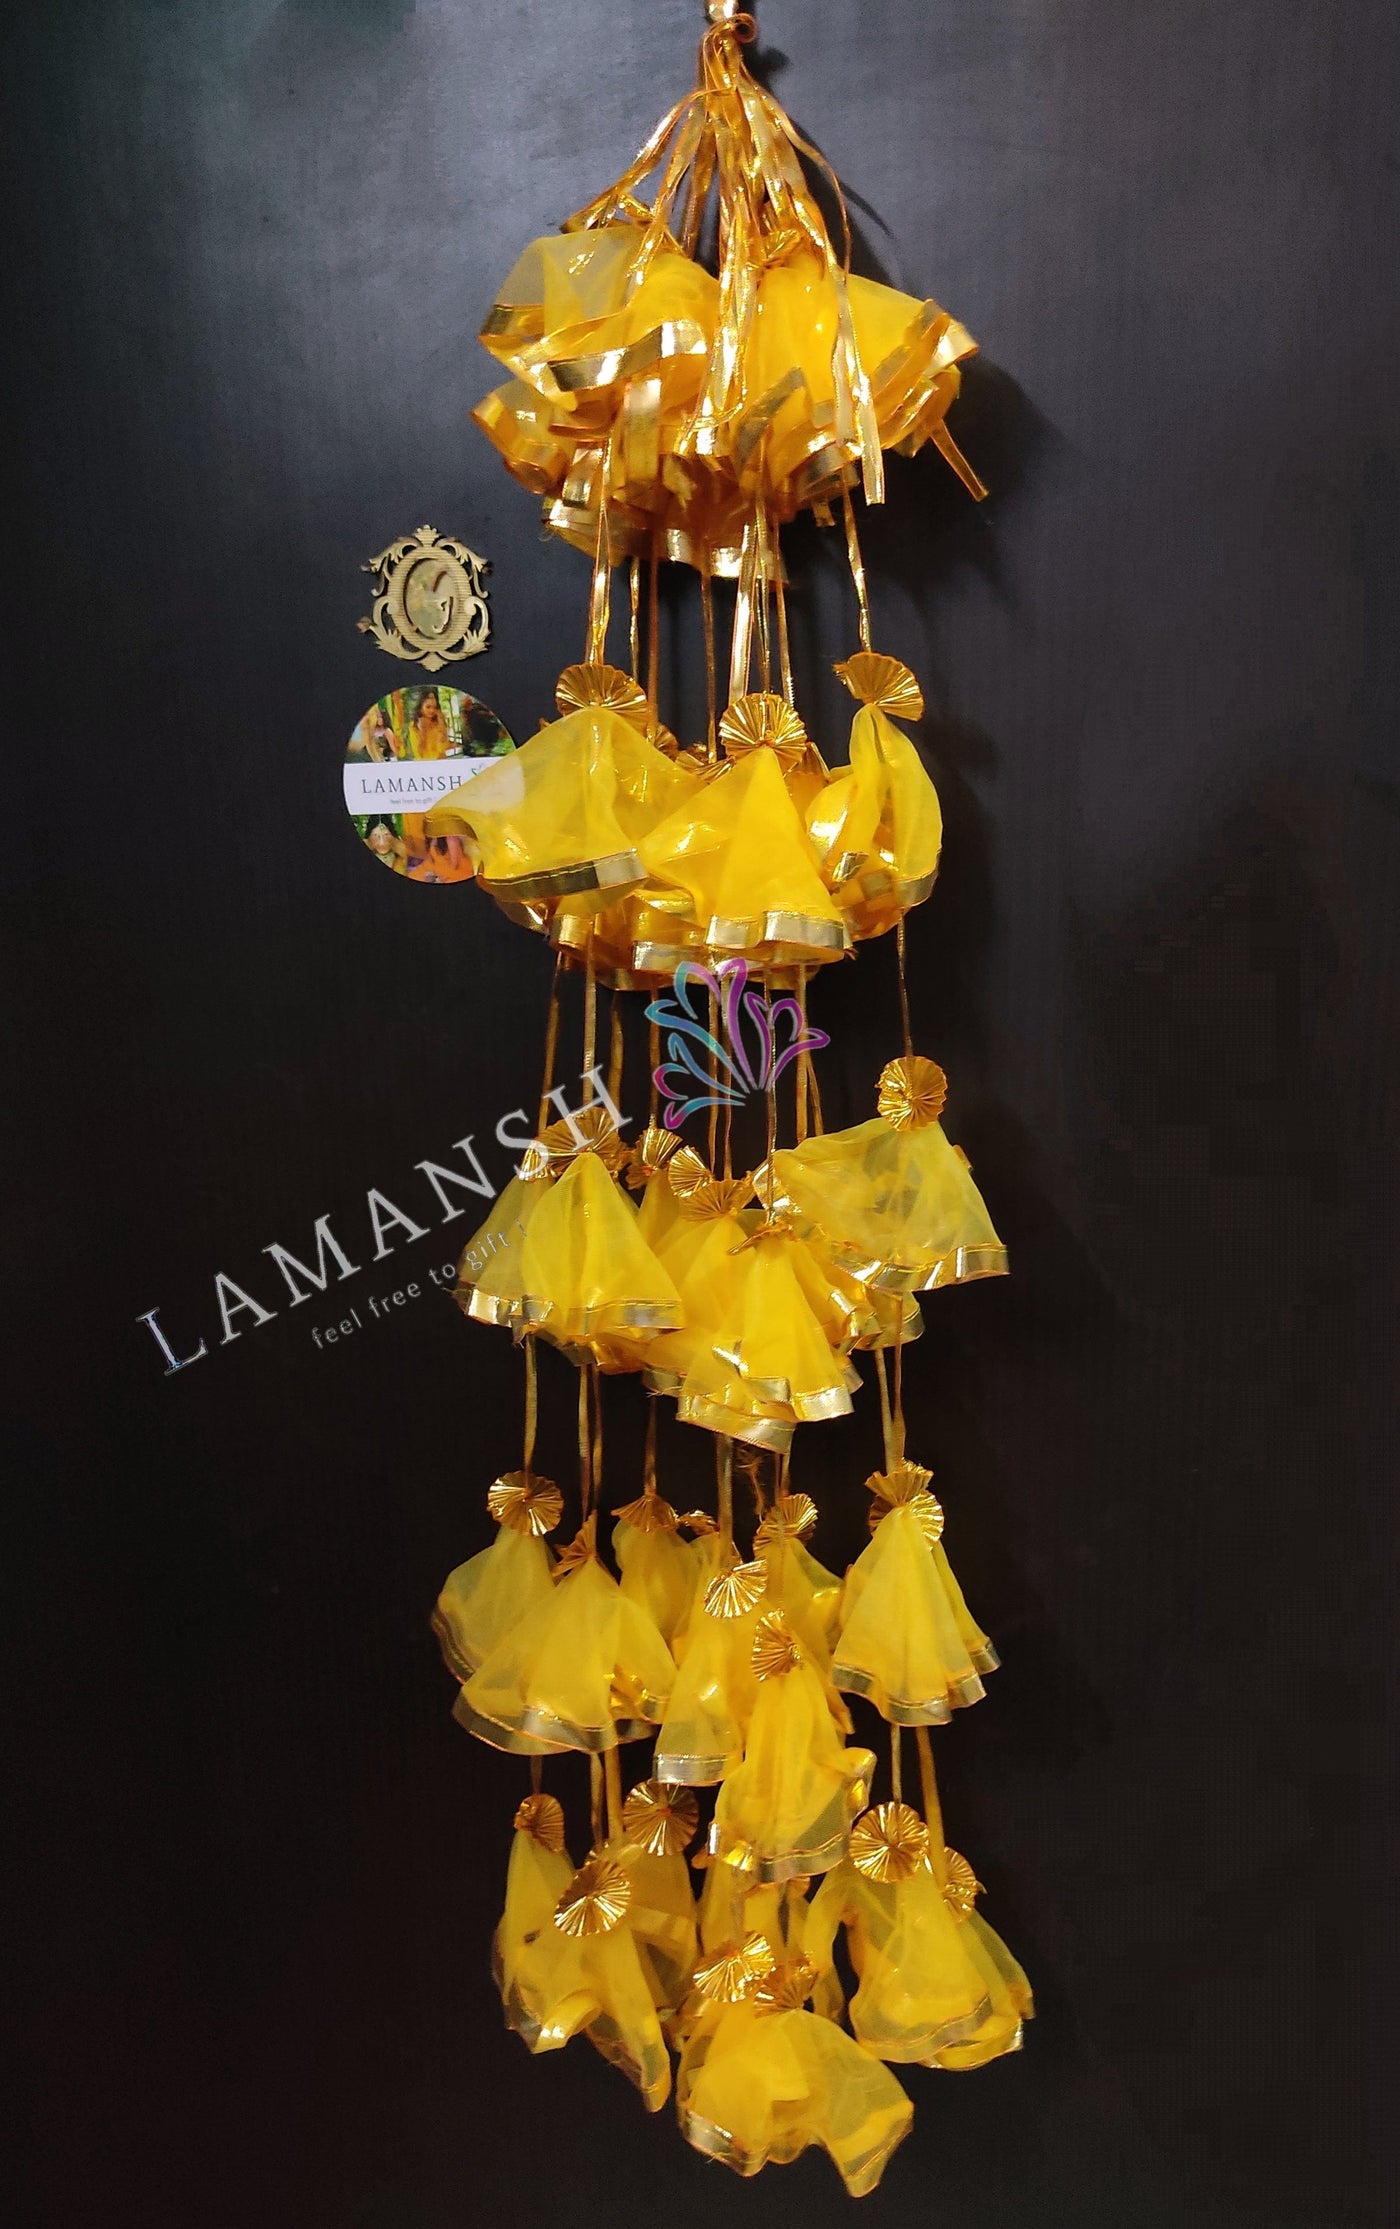 Lamansh net hangings LAMANSH® ( Pack of 10 ) 4 ft Net Hangings for Wedding Backdrops / Fabric Gota hangings for Haldi & Indian Wedding Event Decoration